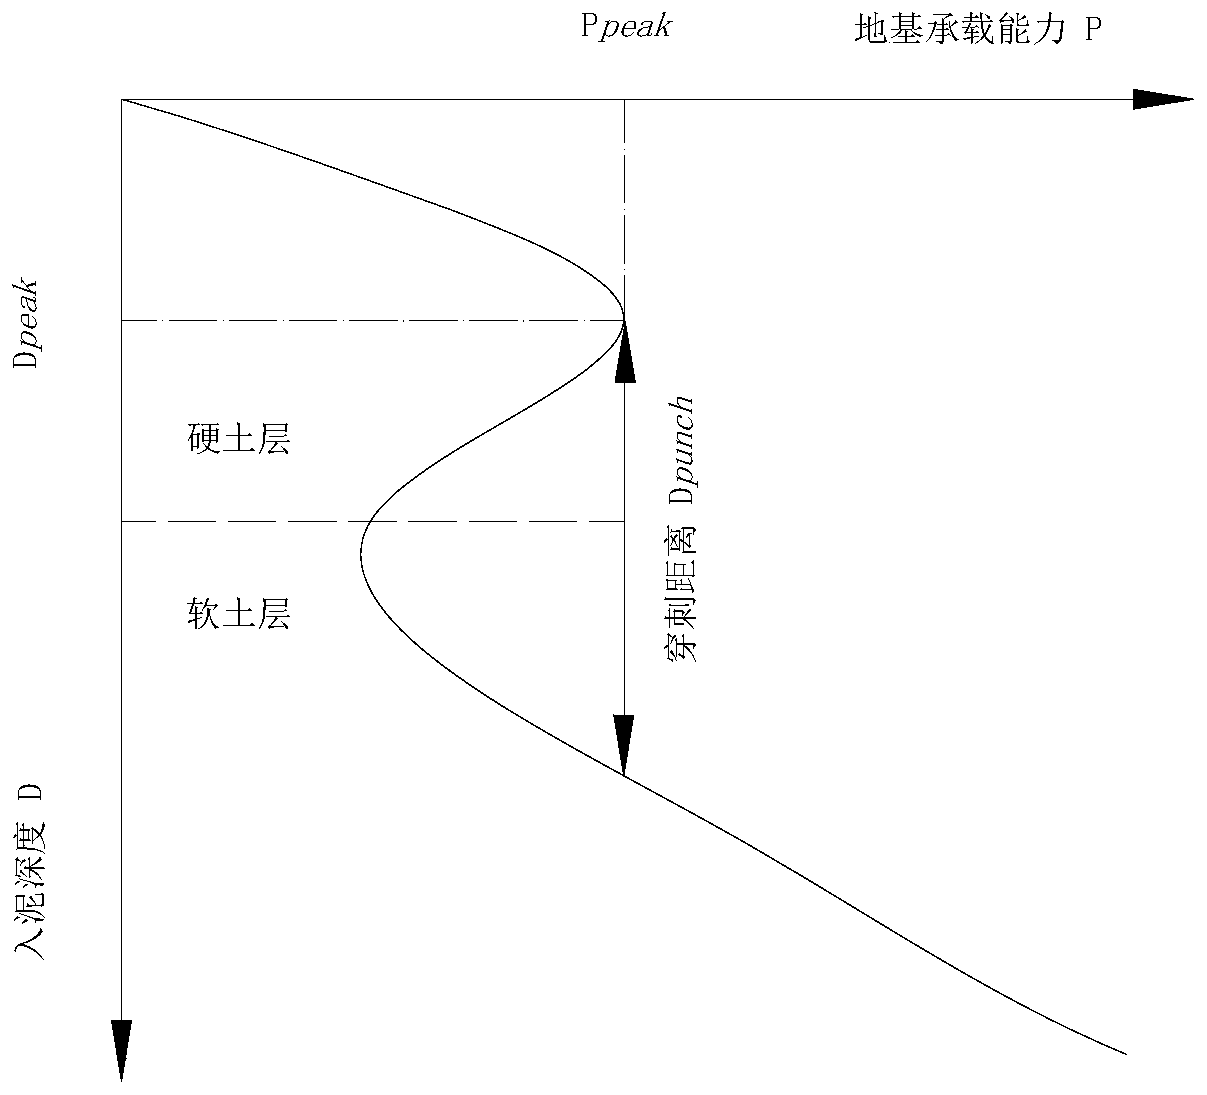 Method for calculating puncture distance of self-elevating platform